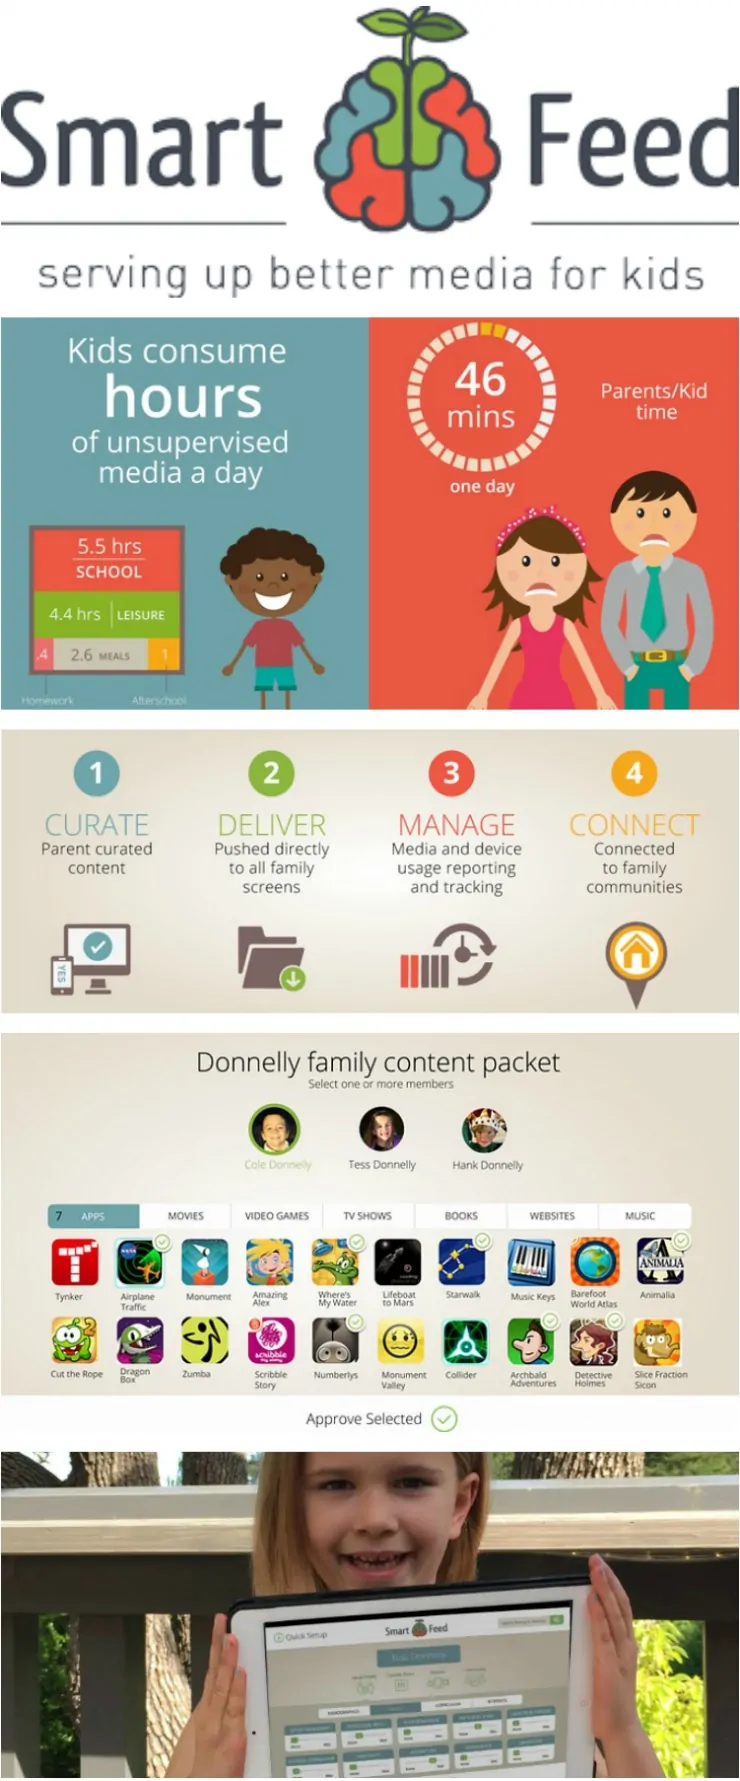 SmartFeed Is Serving Up Better Media For Kids | 5minutesformom.com